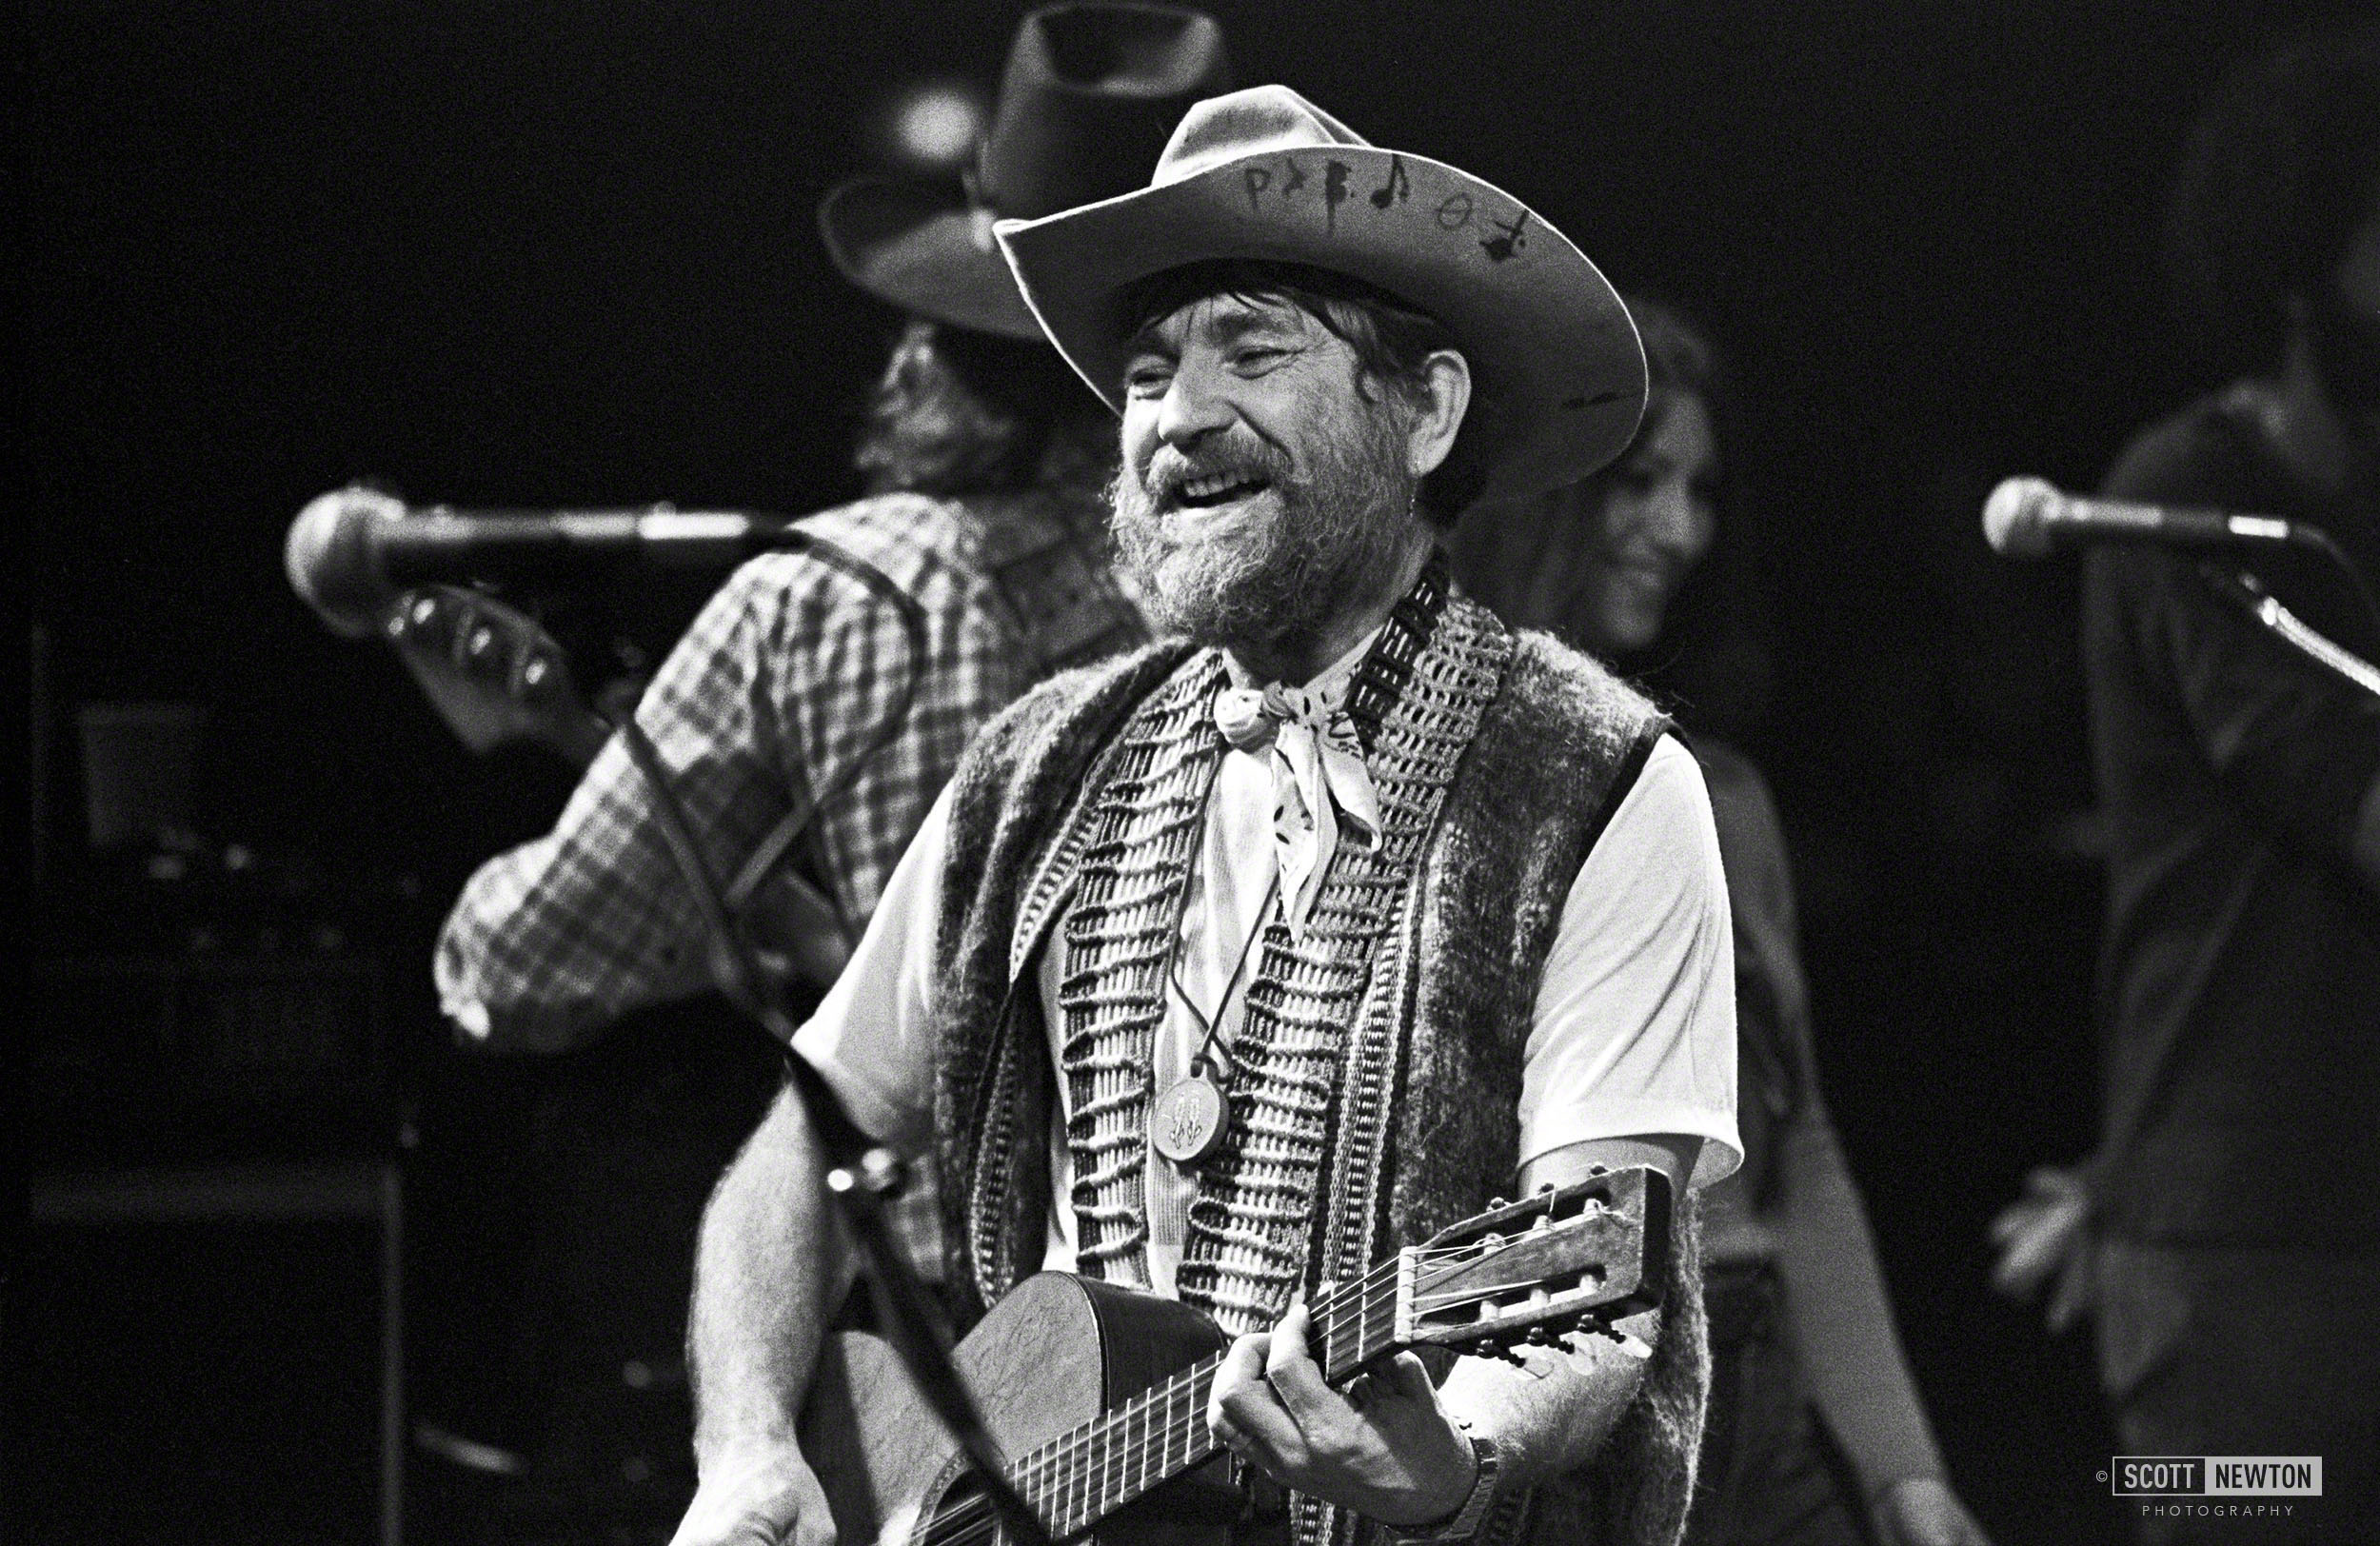 Willie @ San Antonio, Texas 1977